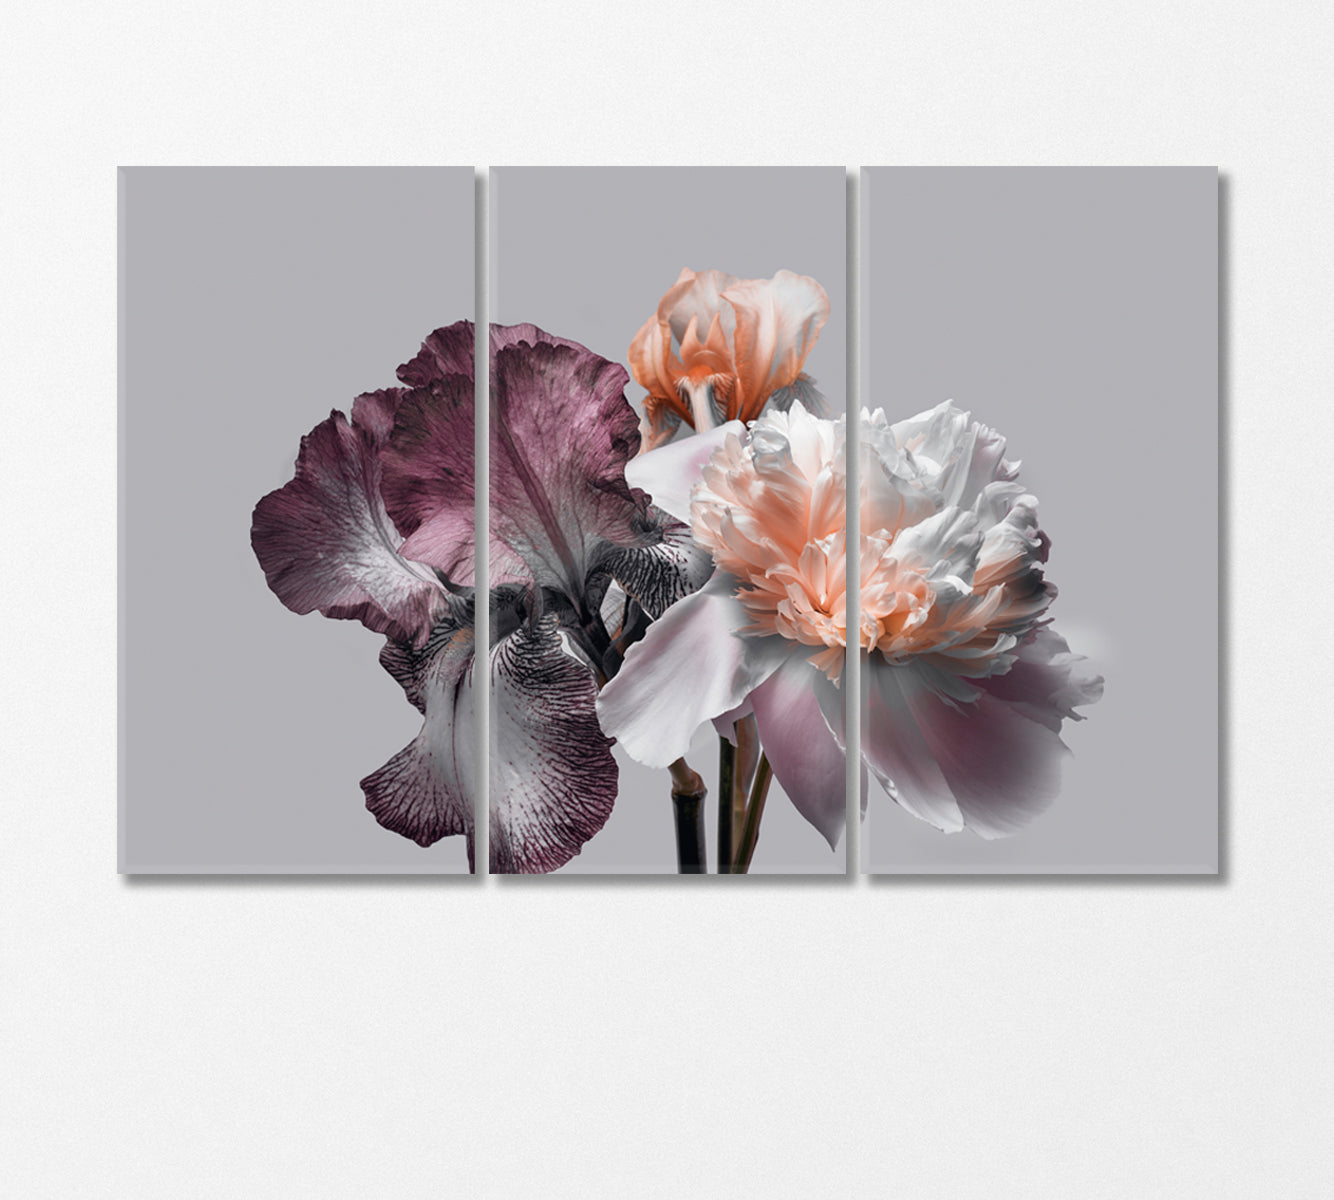 Bouquet of Peonies and Irises Canvas Print-CetArt-3 Panels-36x24 inches-CetArt